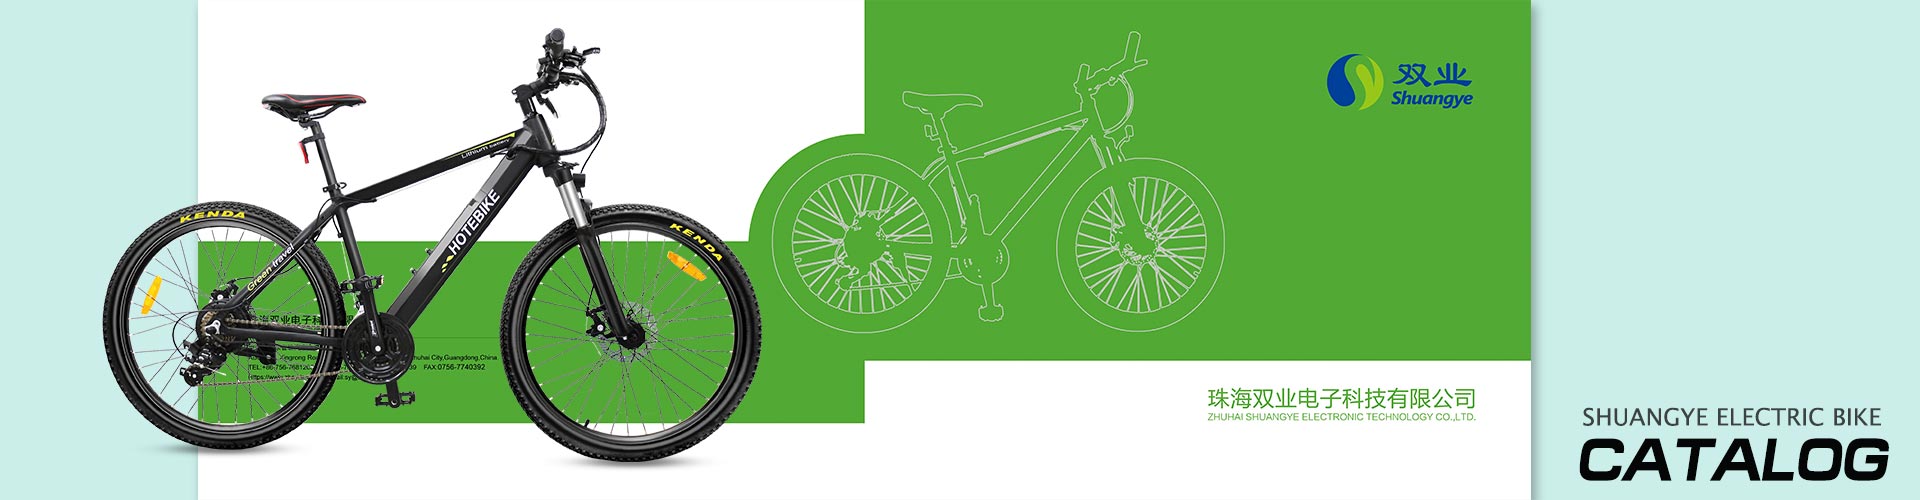 Den nyeste Shuangye elektriske cykel katalog